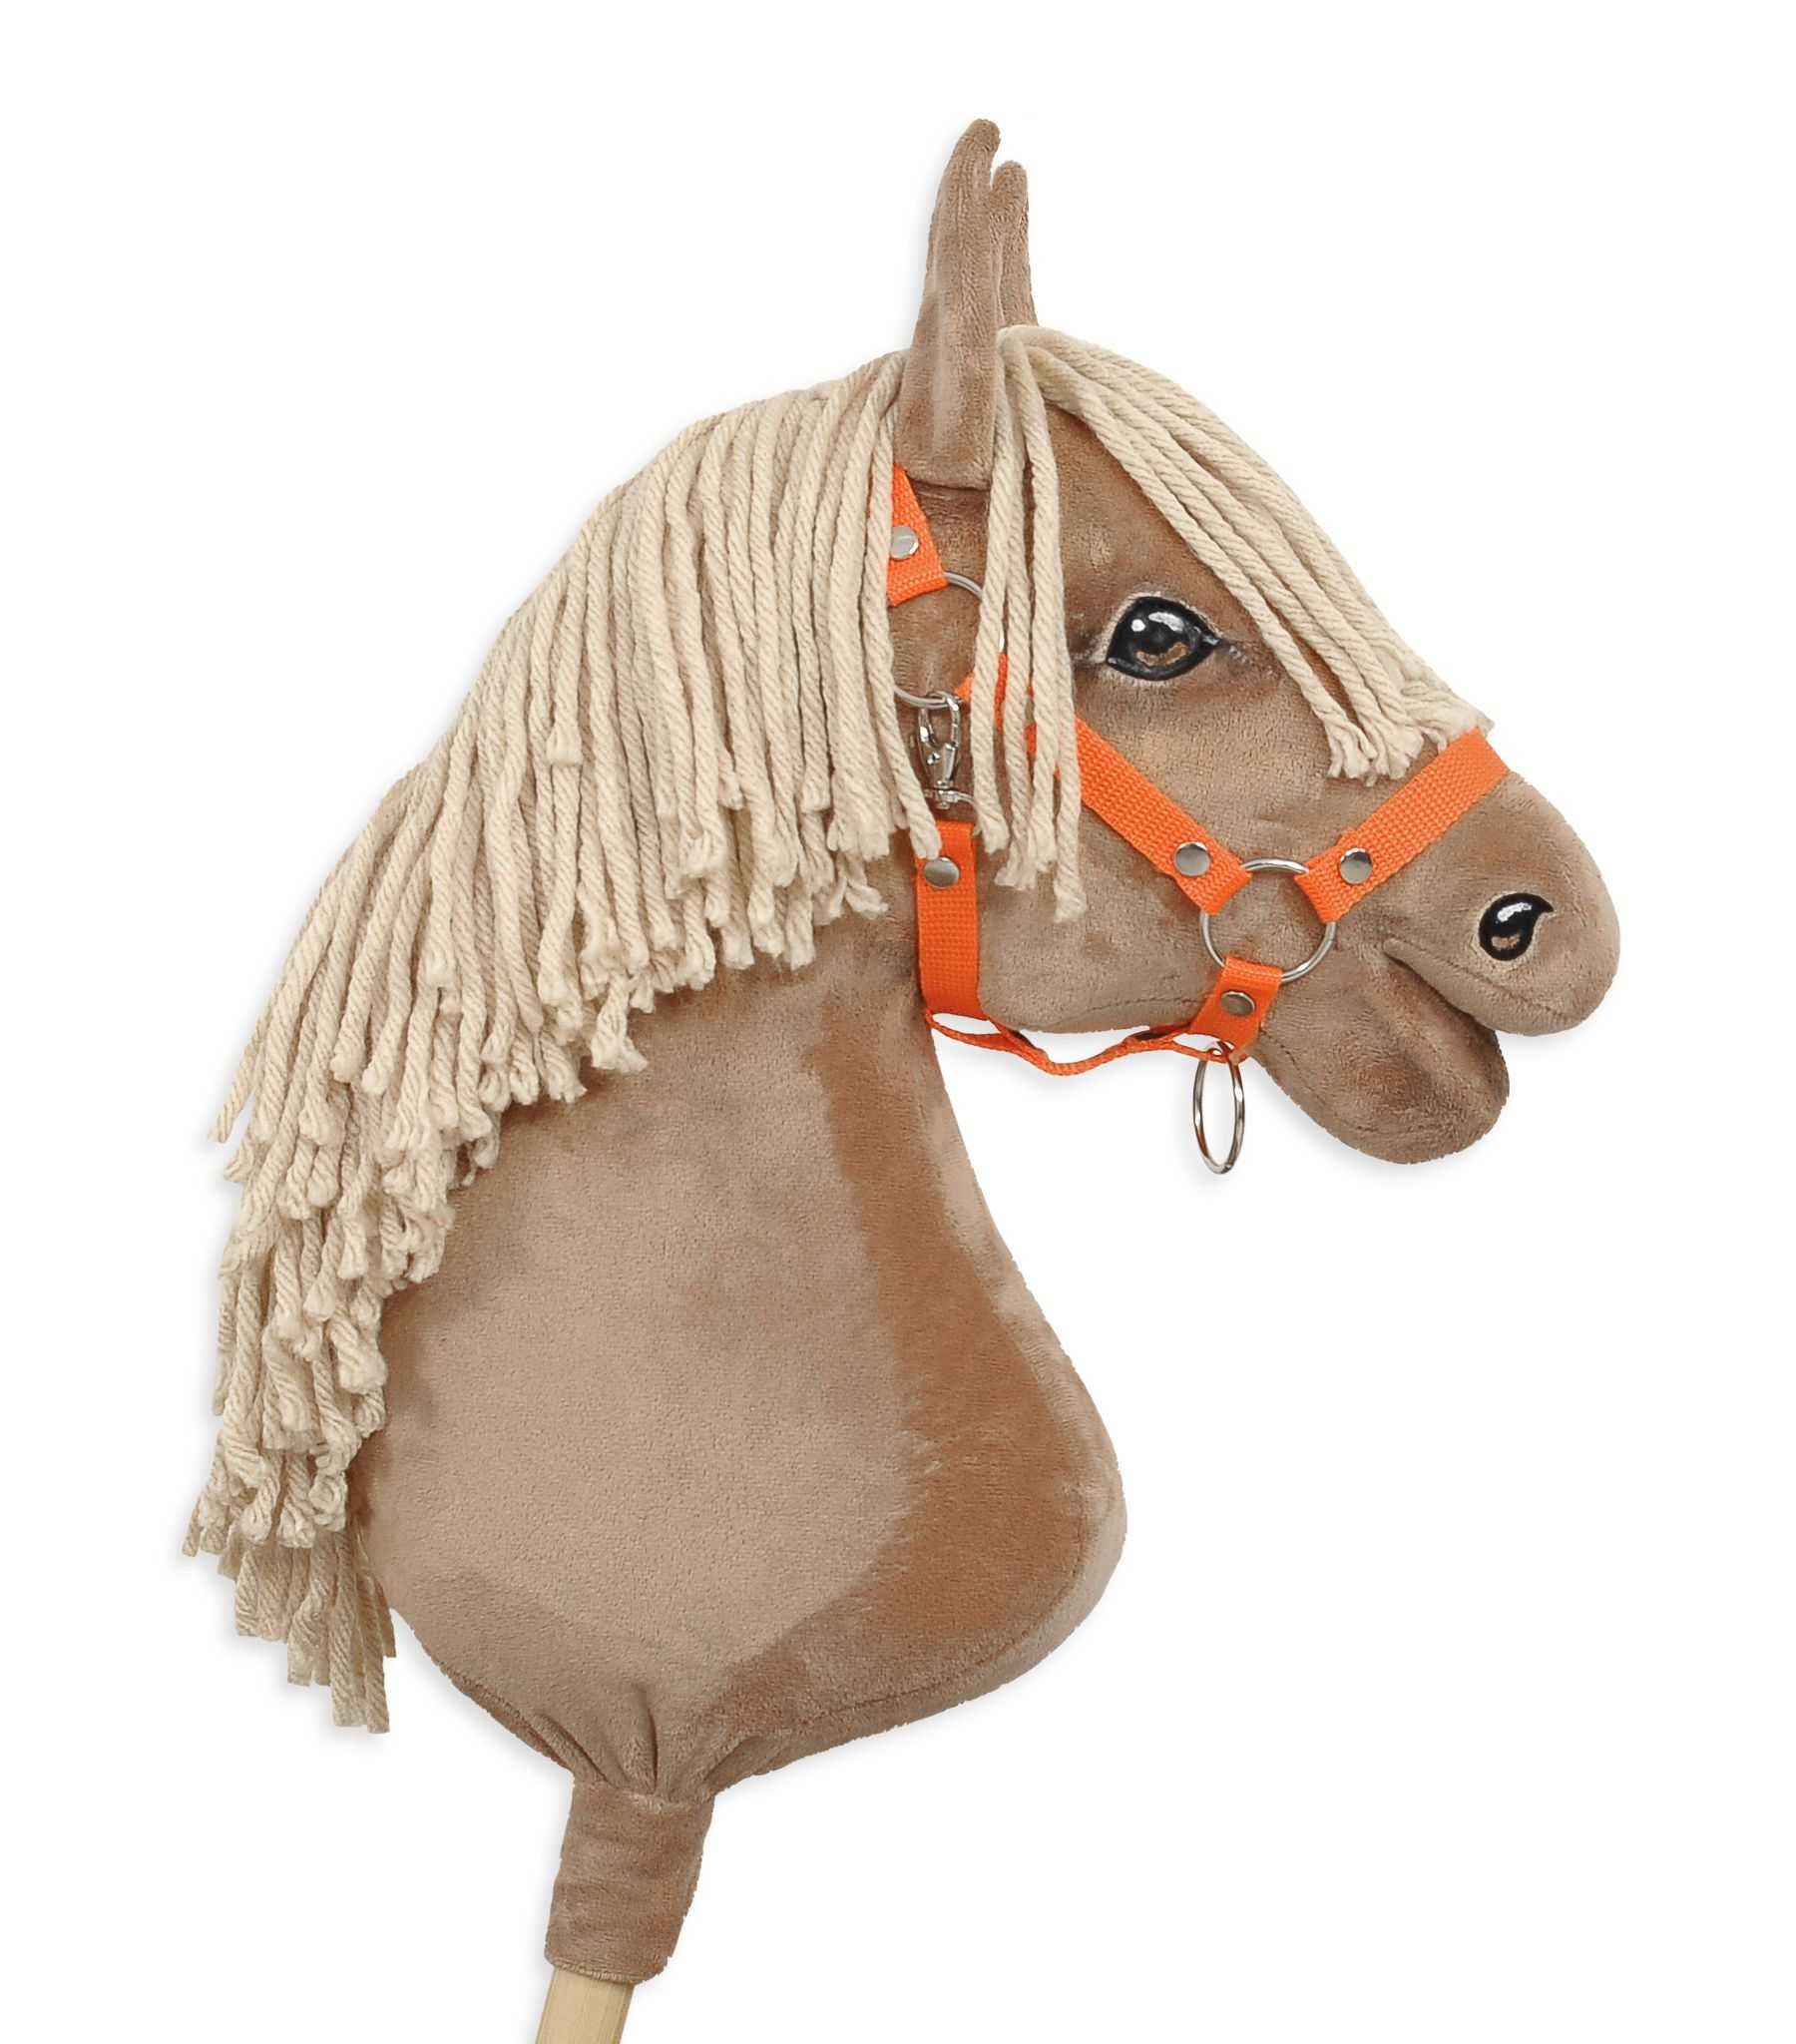 Kantar regulowany dla konia Hobby Horse A3 - pomarańczowy!